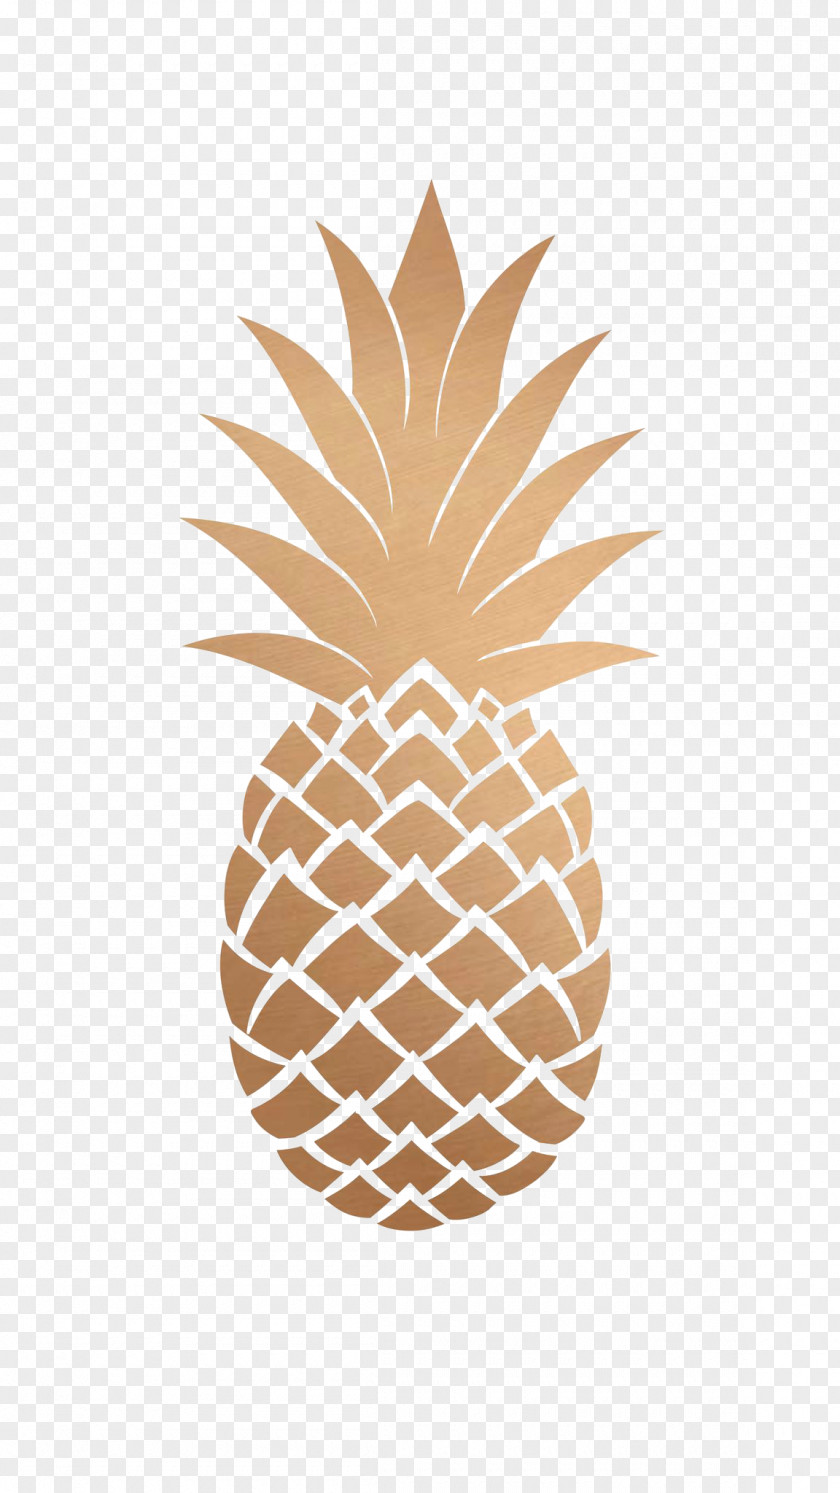 Watermelon Pineapple Desktop Wallpaper CUTE FRUIT Drawing PNG